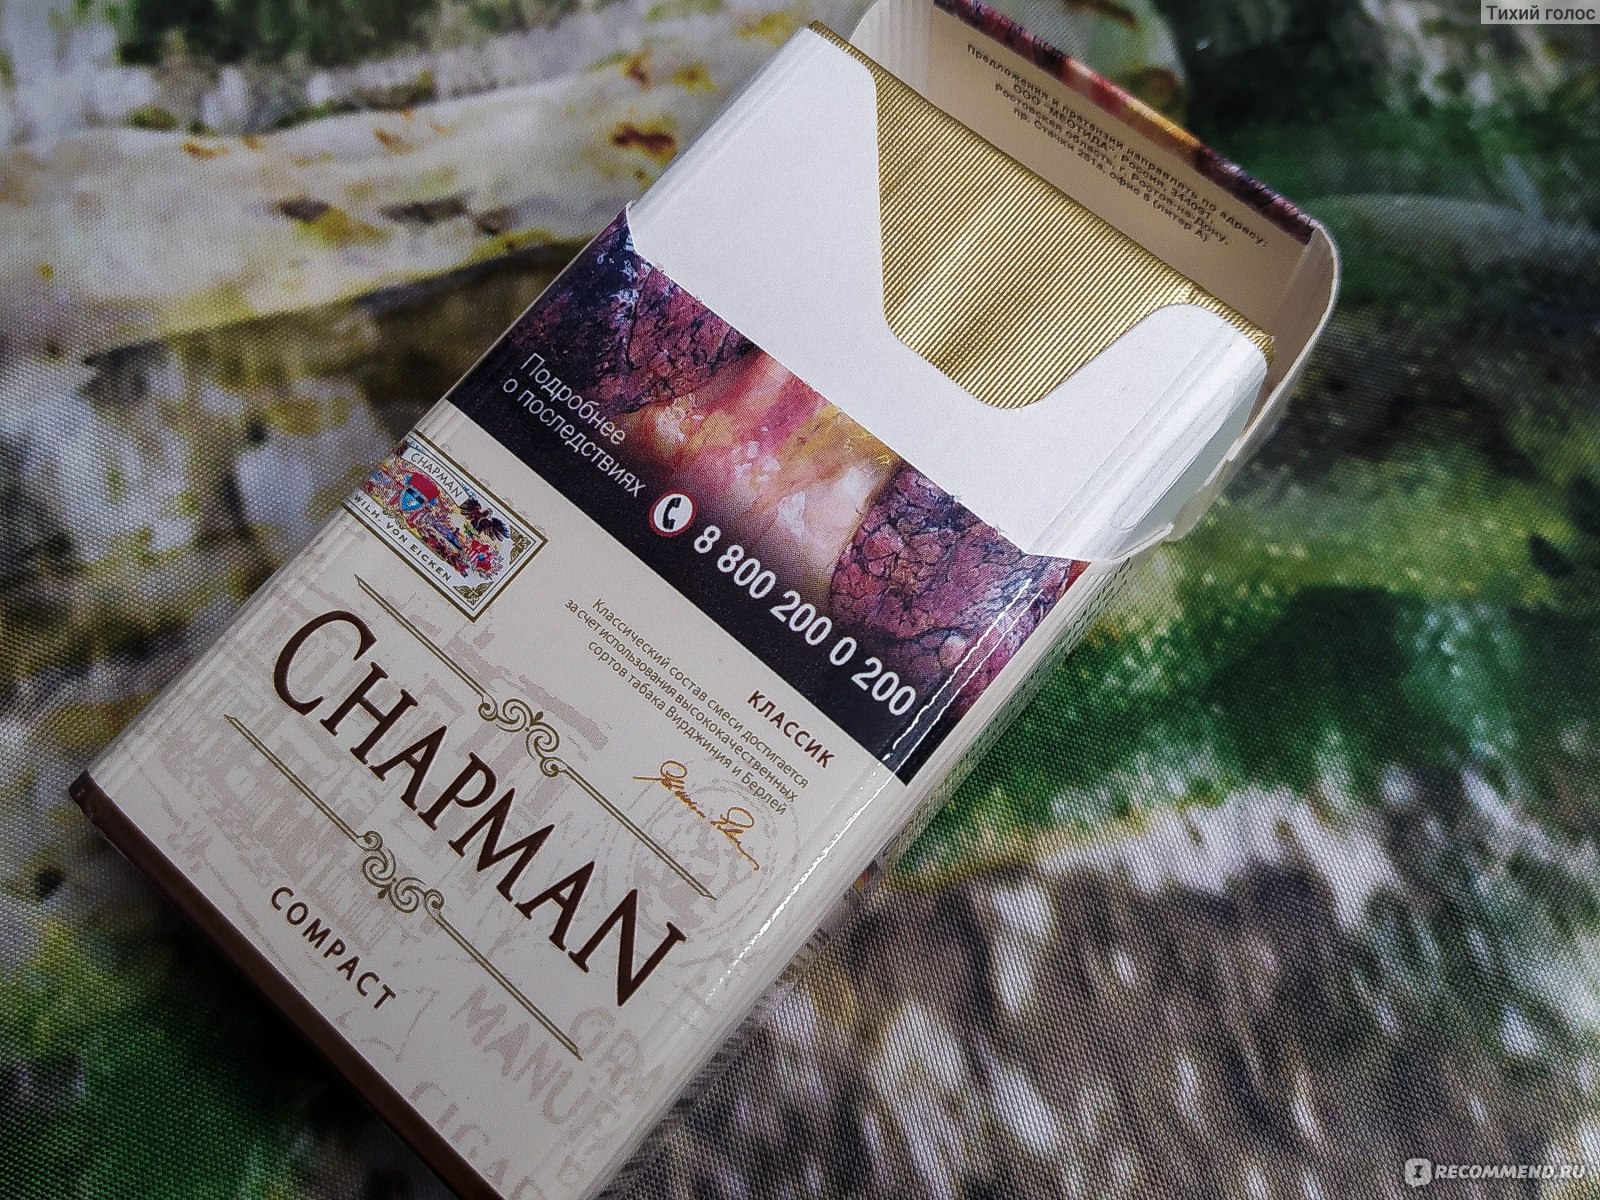 Виды сигарет чапман. Chapman Compact сигареты. Сигареты Чапман компакт Классик. Чапмен сигареты вишня. Чапман сигареты вишня.